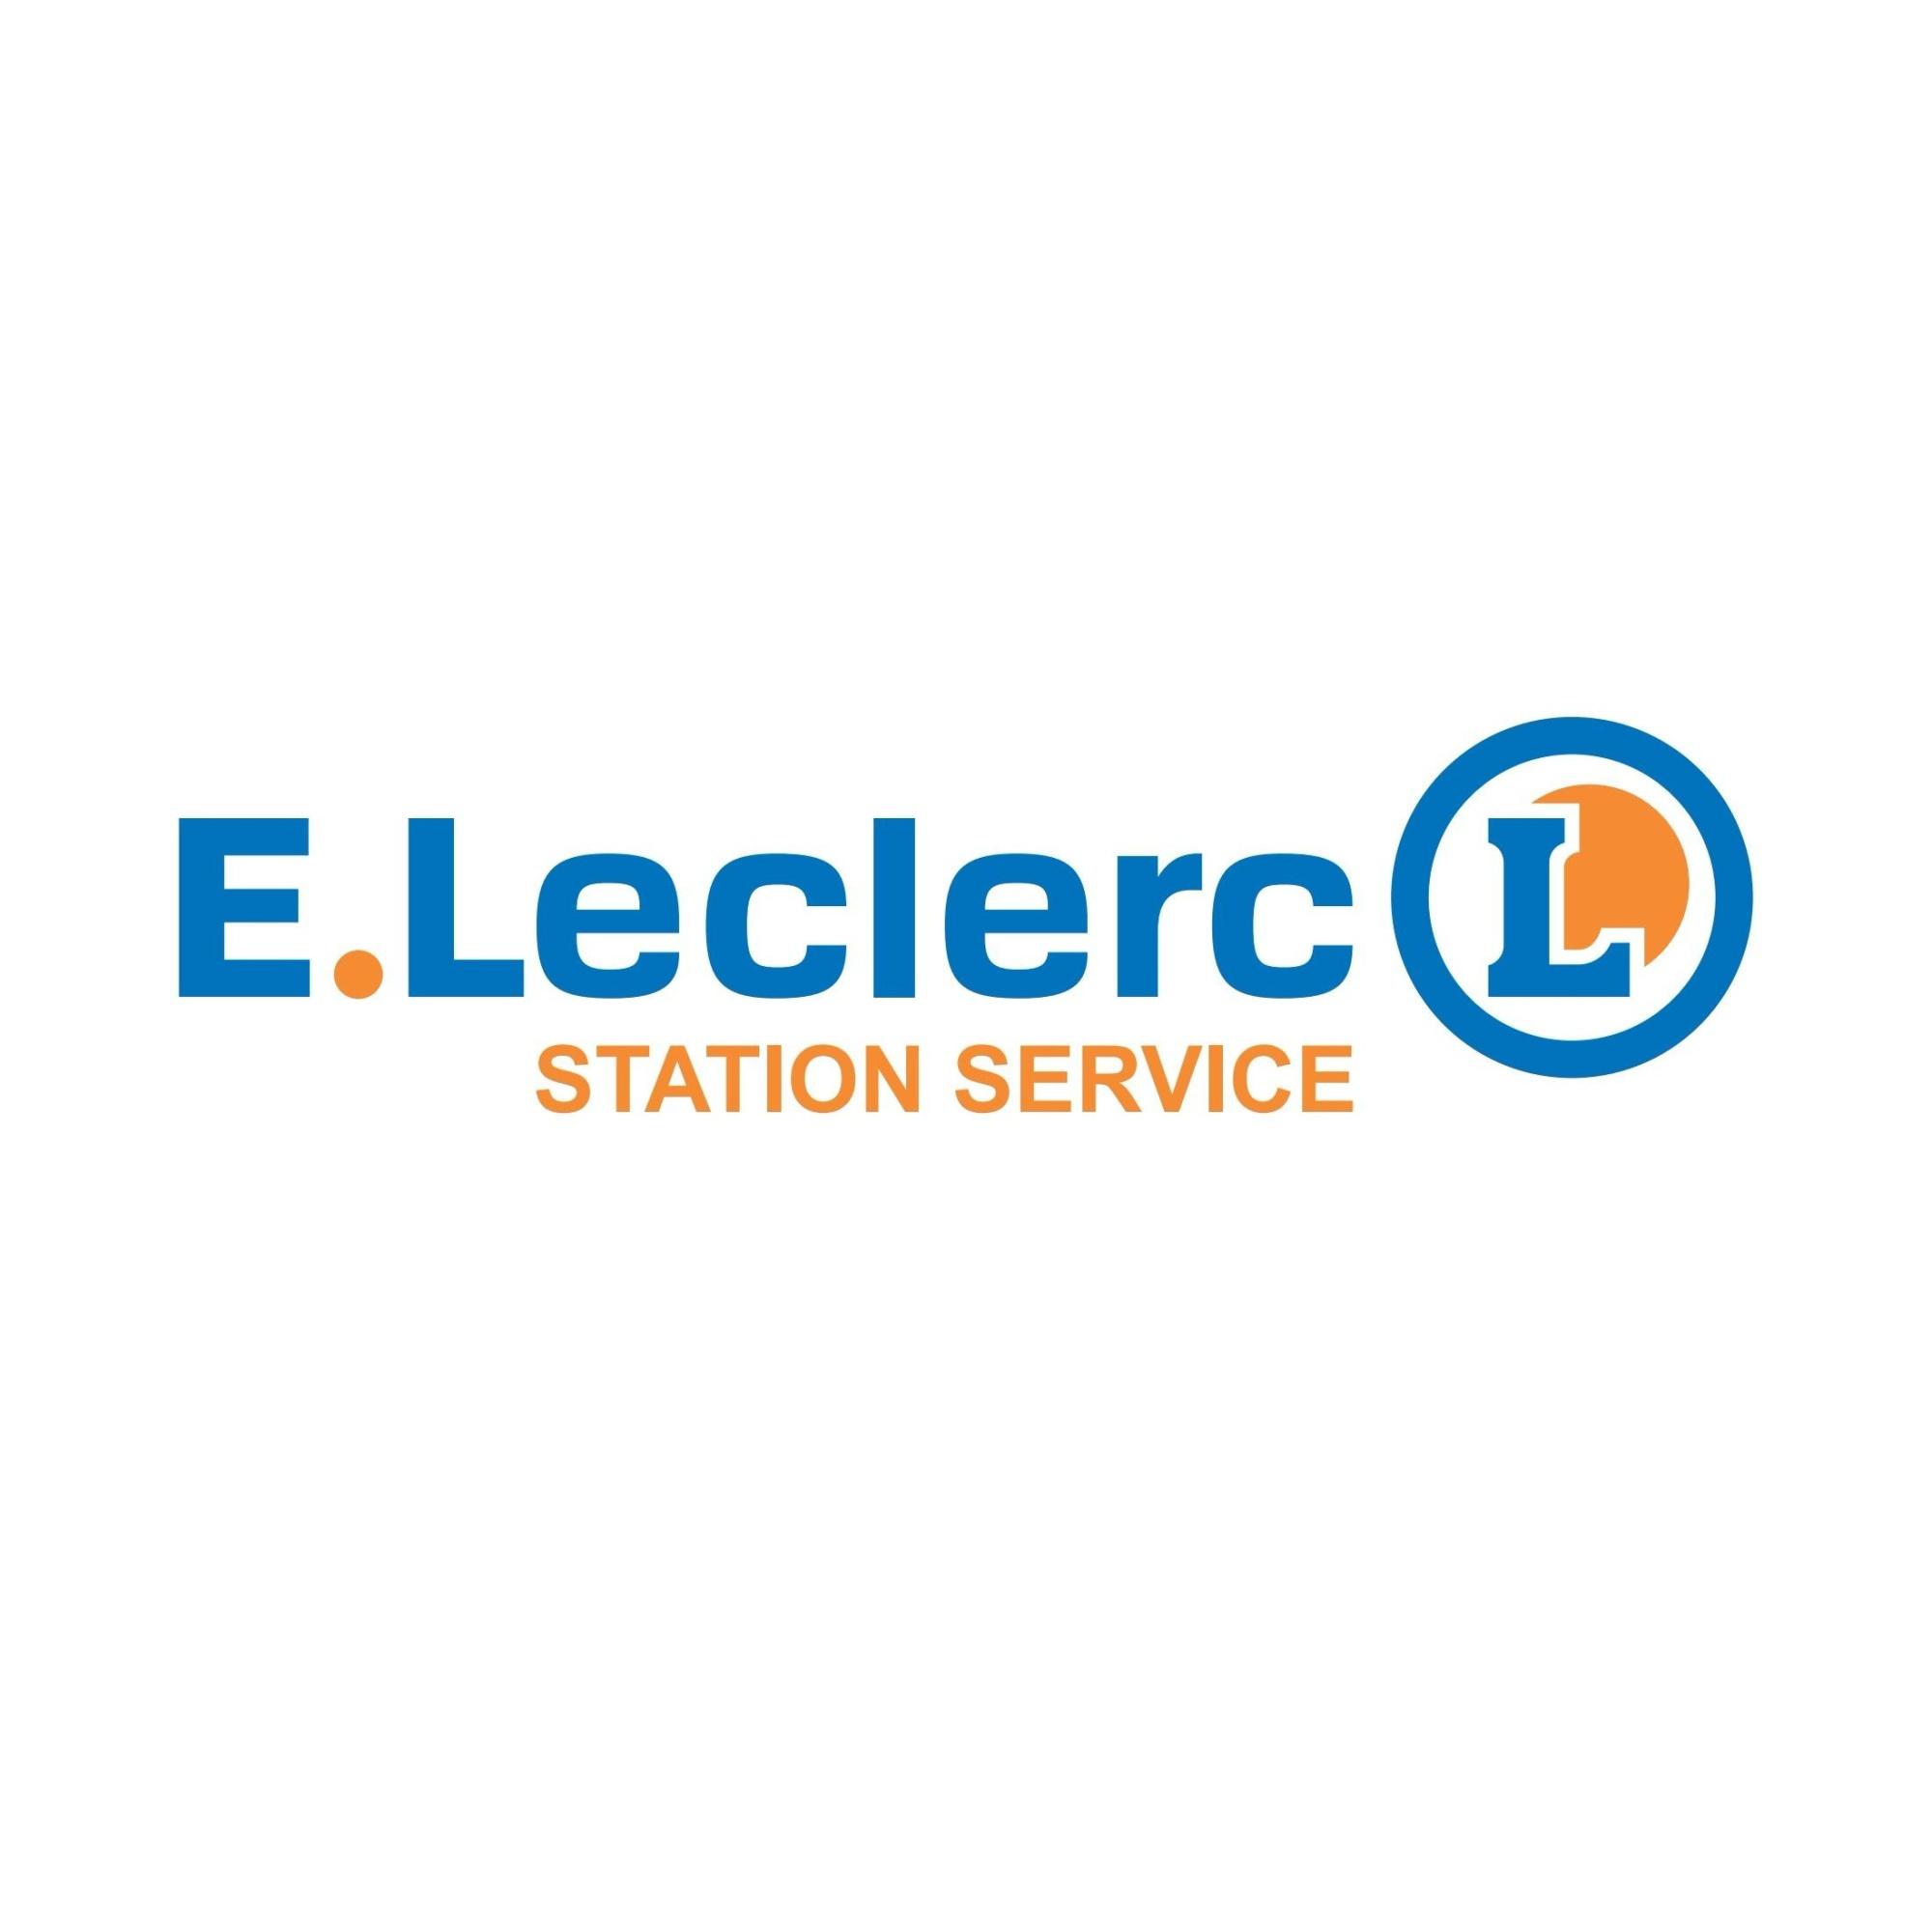 E.leclerc Station Service La Rochelle